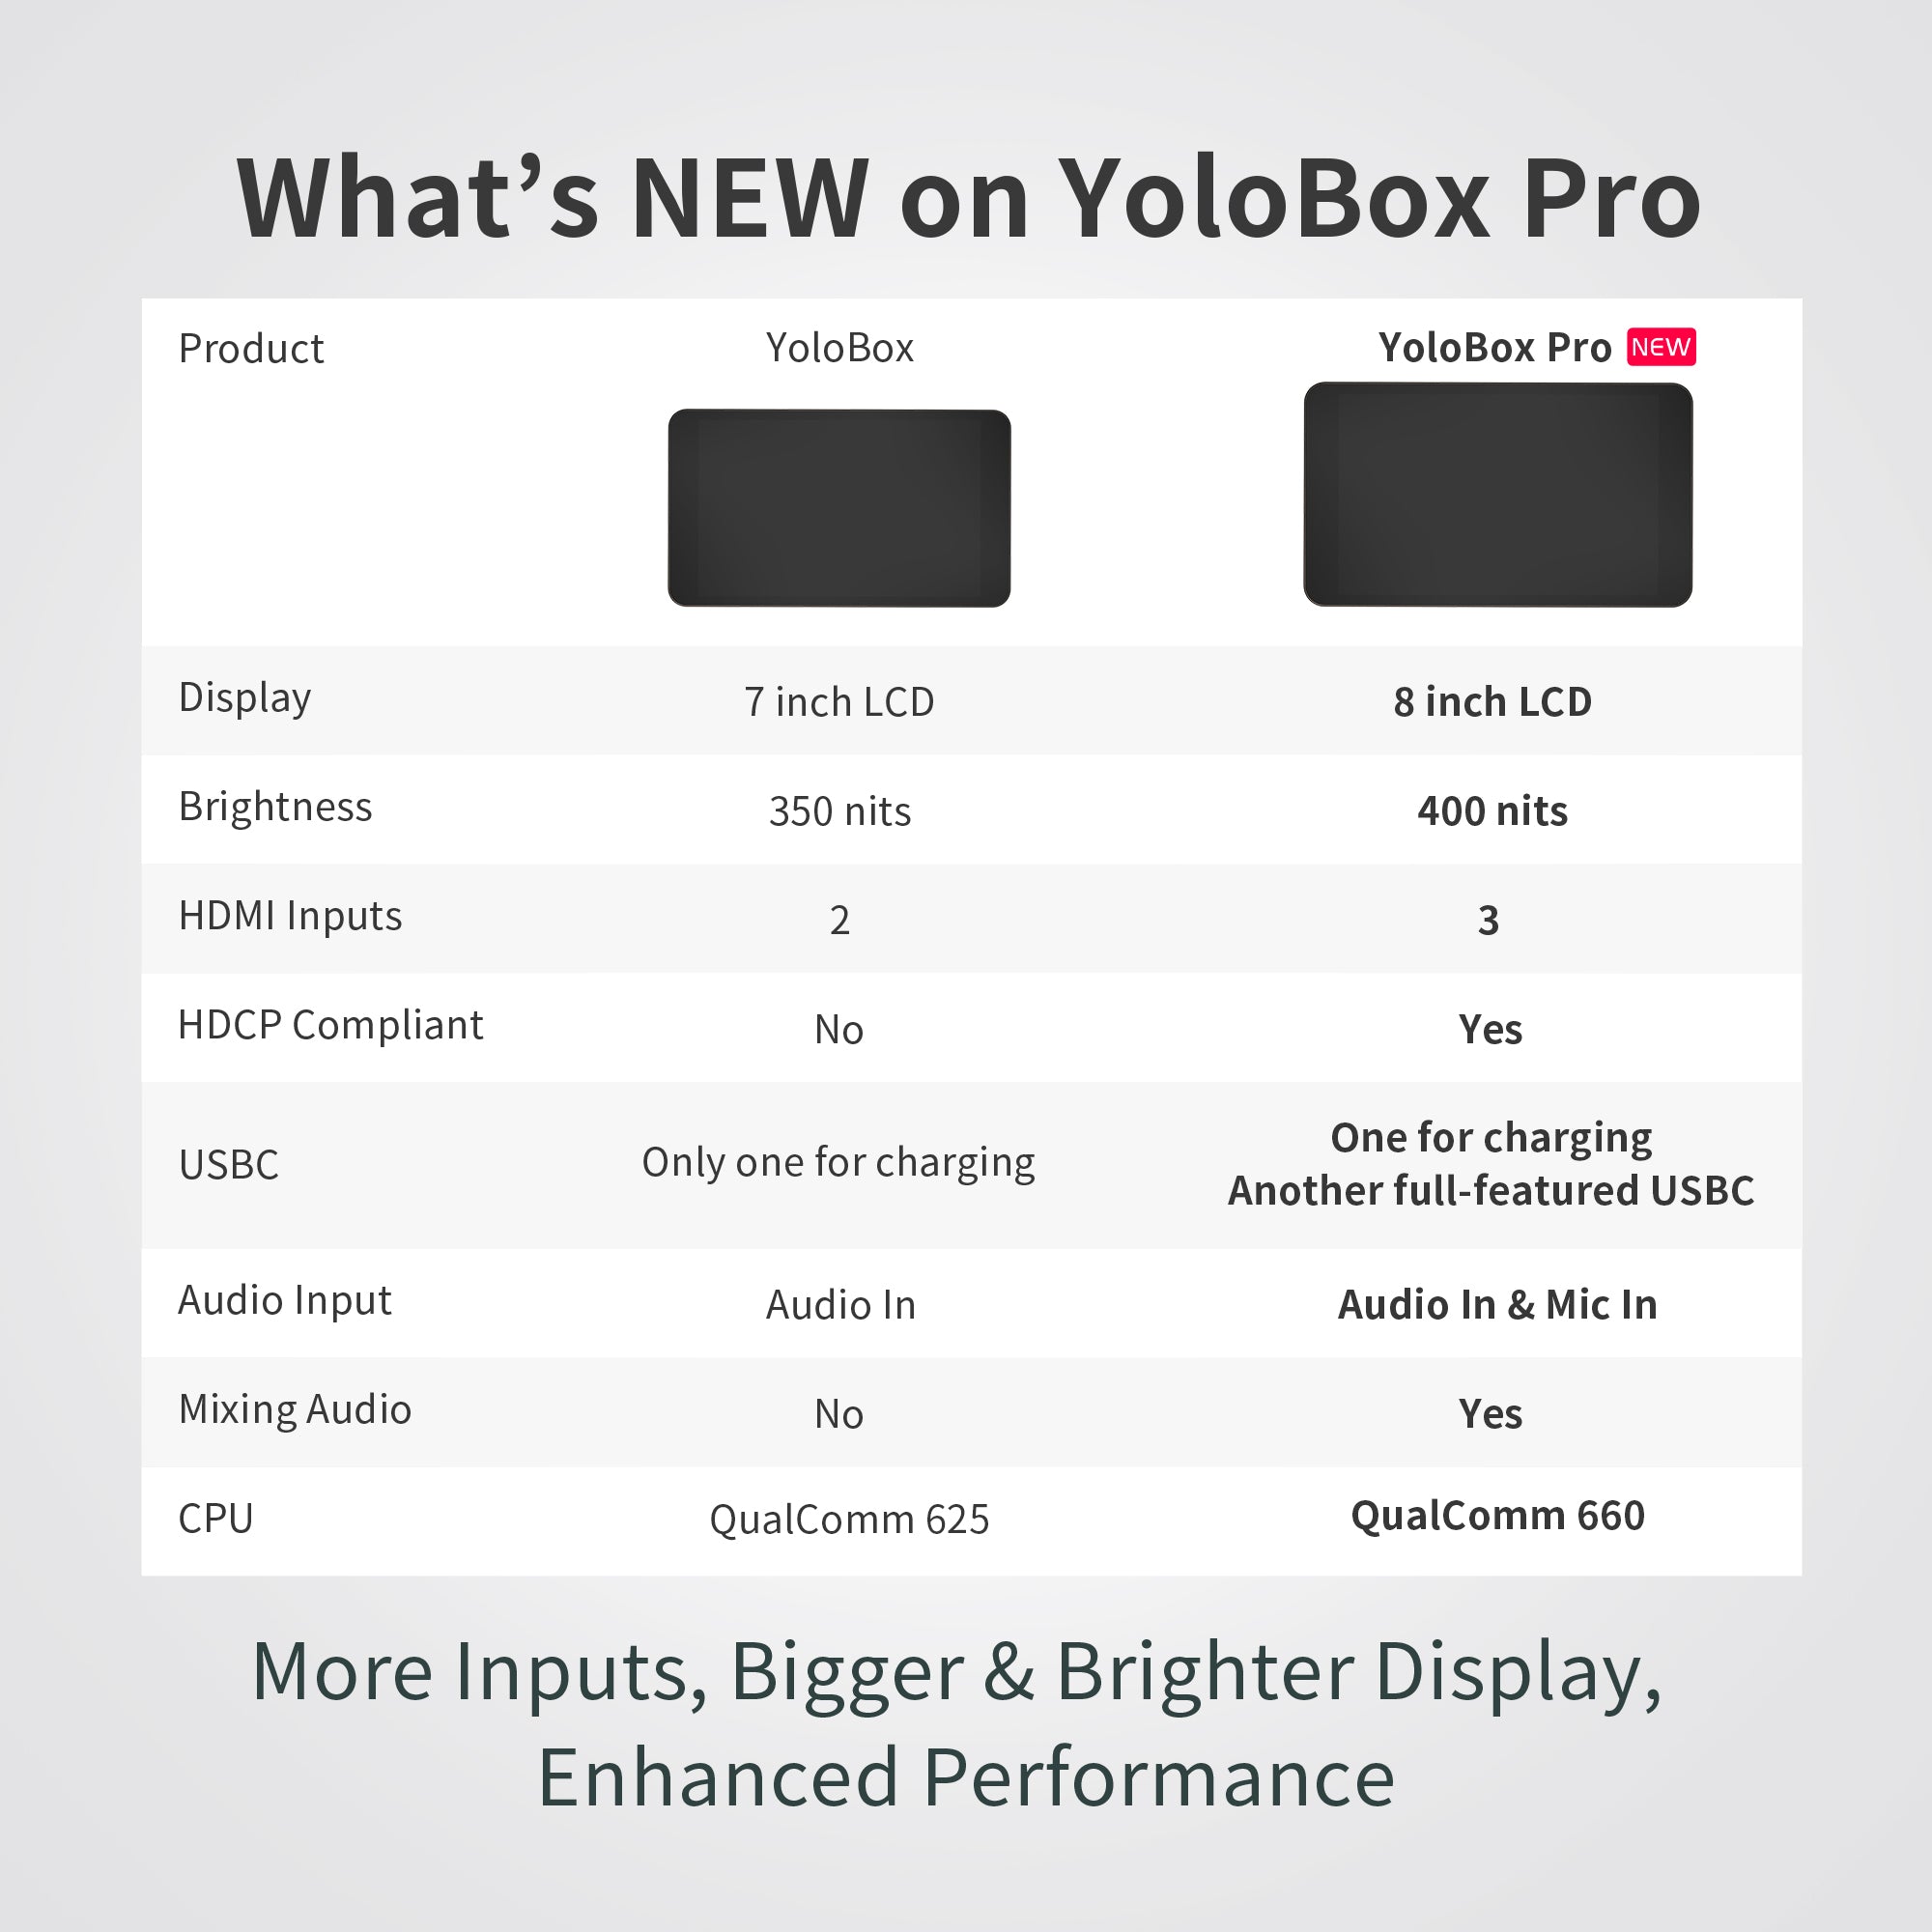 YoloBox Pro